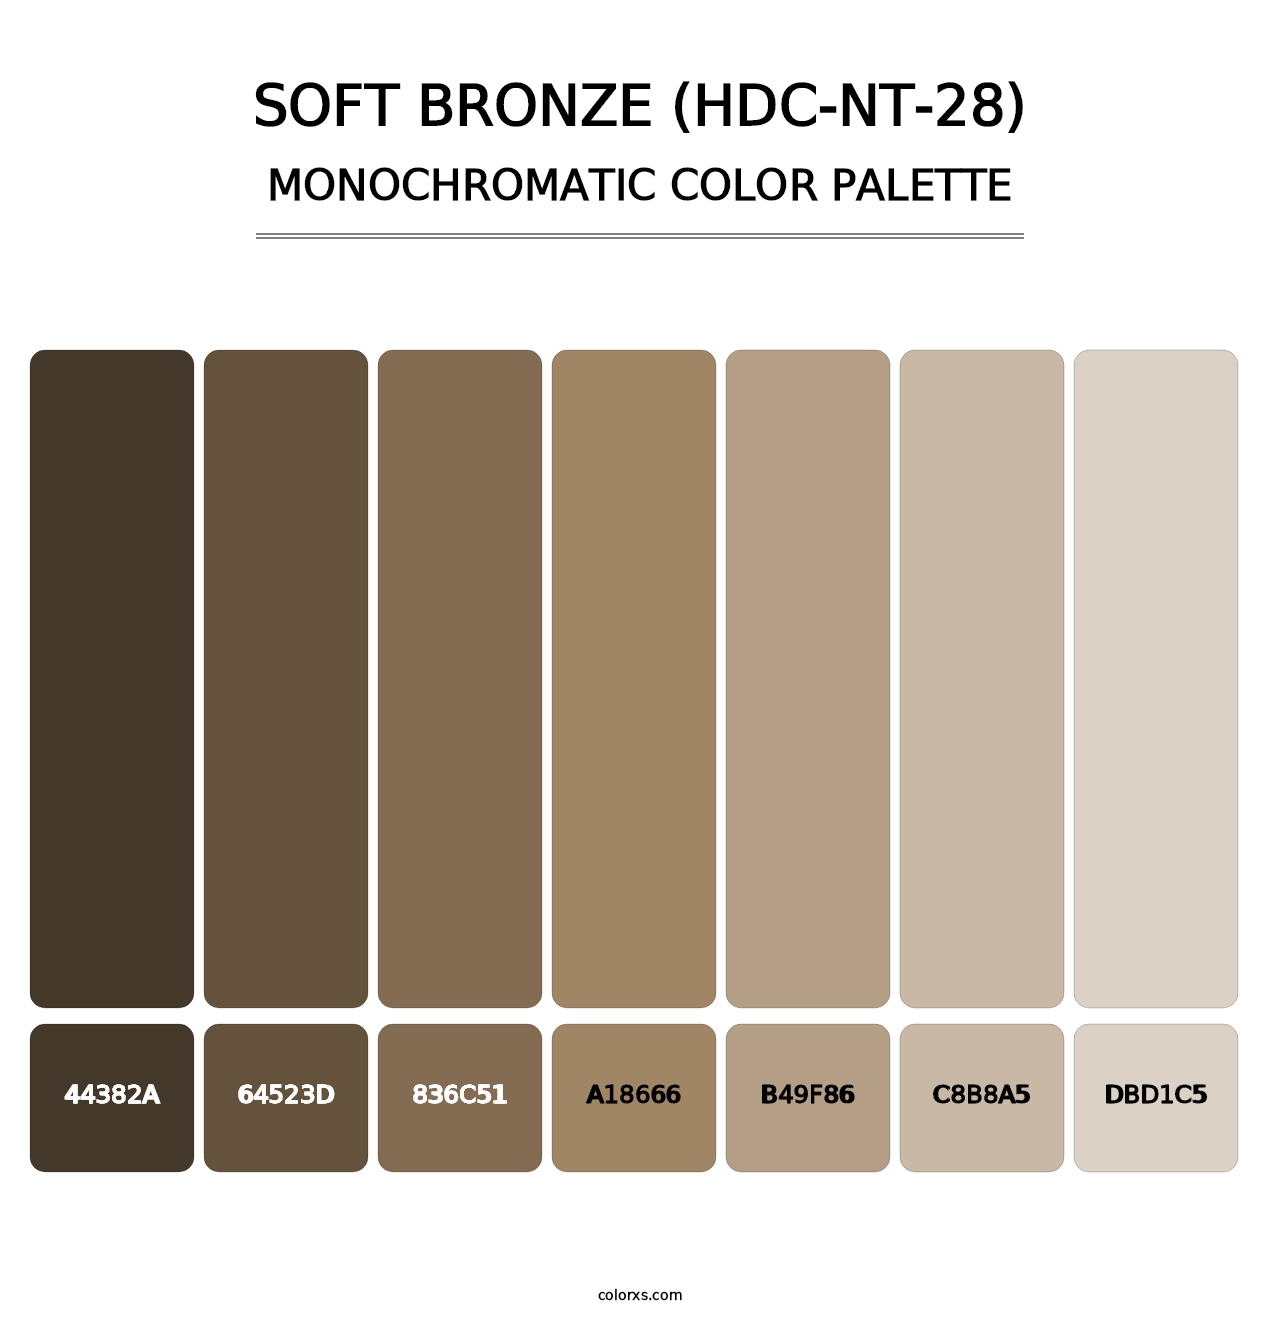 Soft Bronze (HDC-NT-28) - Monochromatic Color Palette